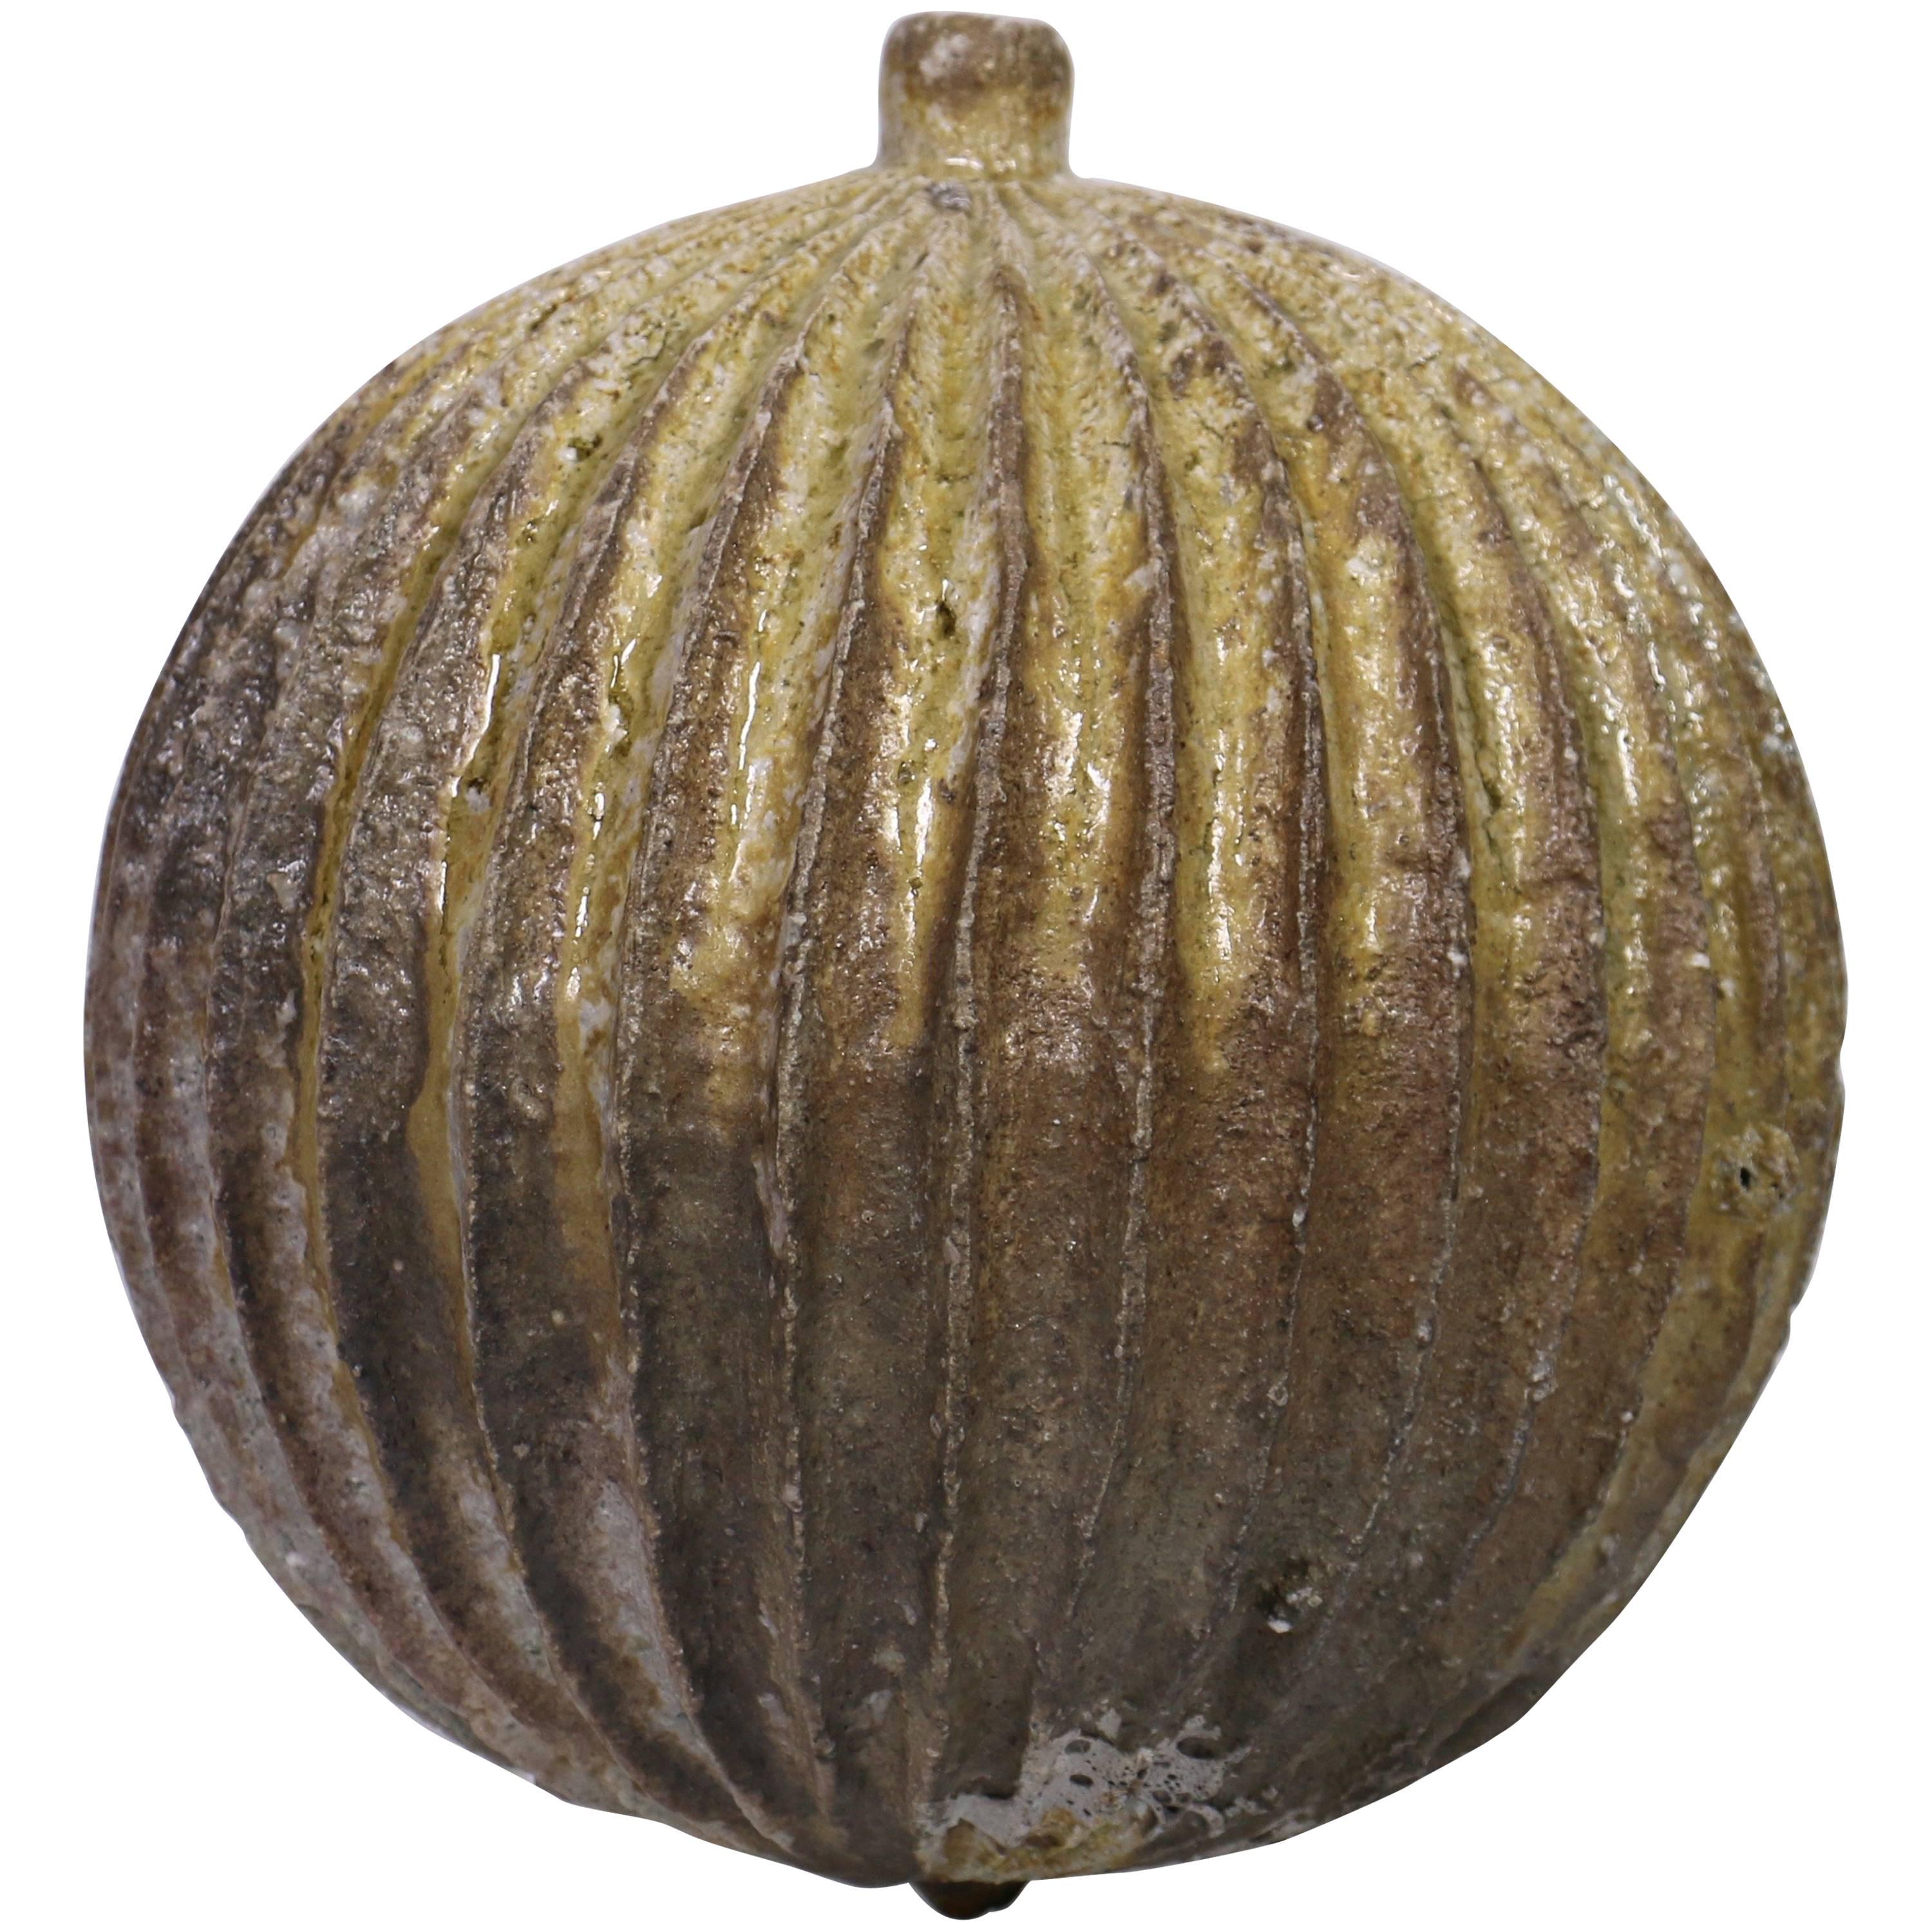 Shiro Otani Gourd, Shaped Vessel Anagama Wood, Fired For Sale